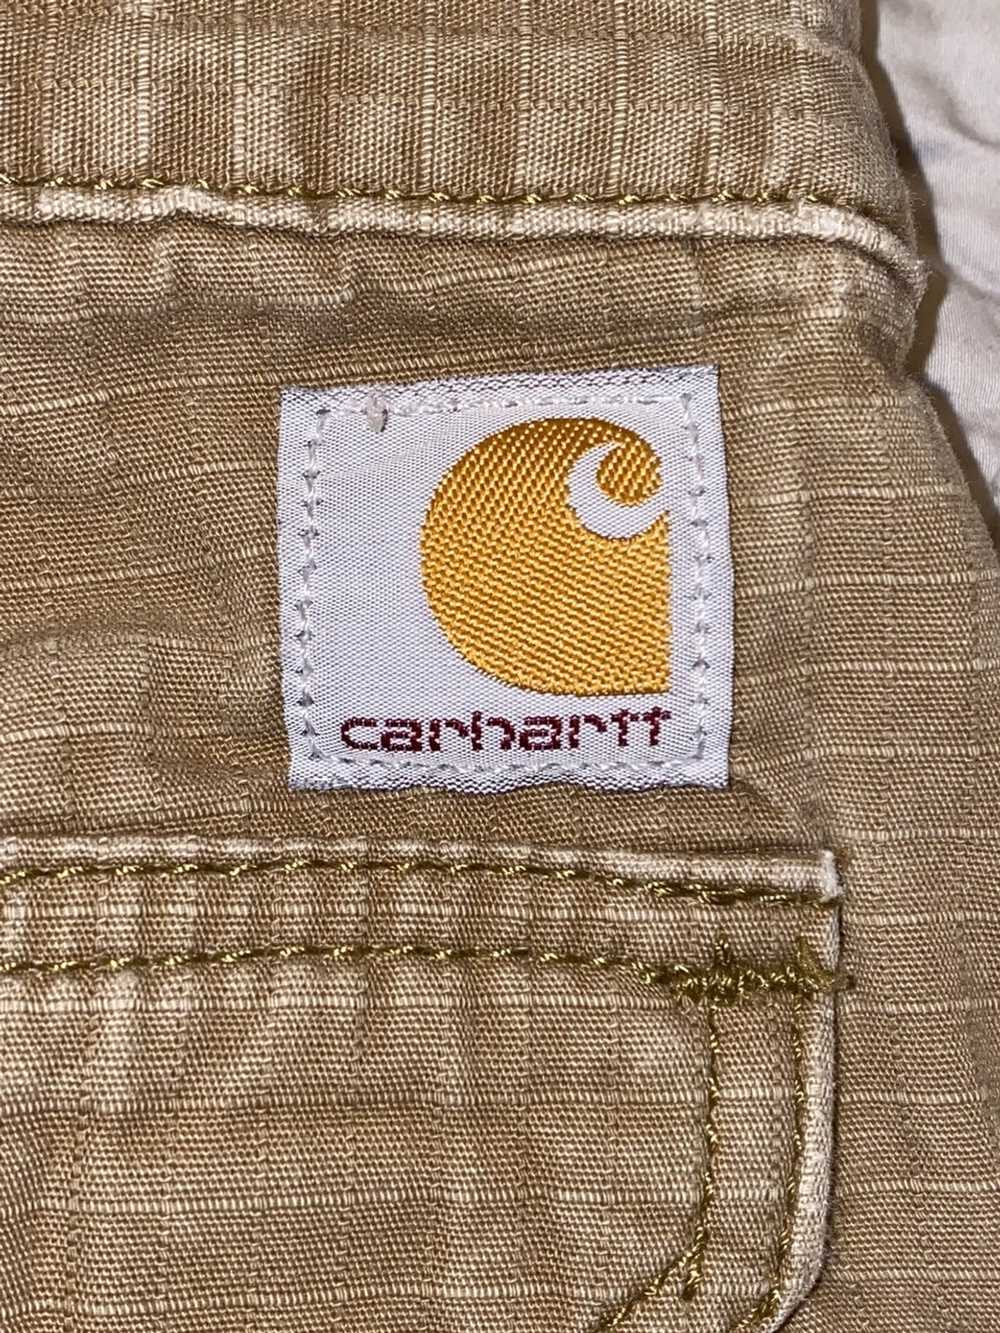 Carhartt Carhartt Cargos - image 3